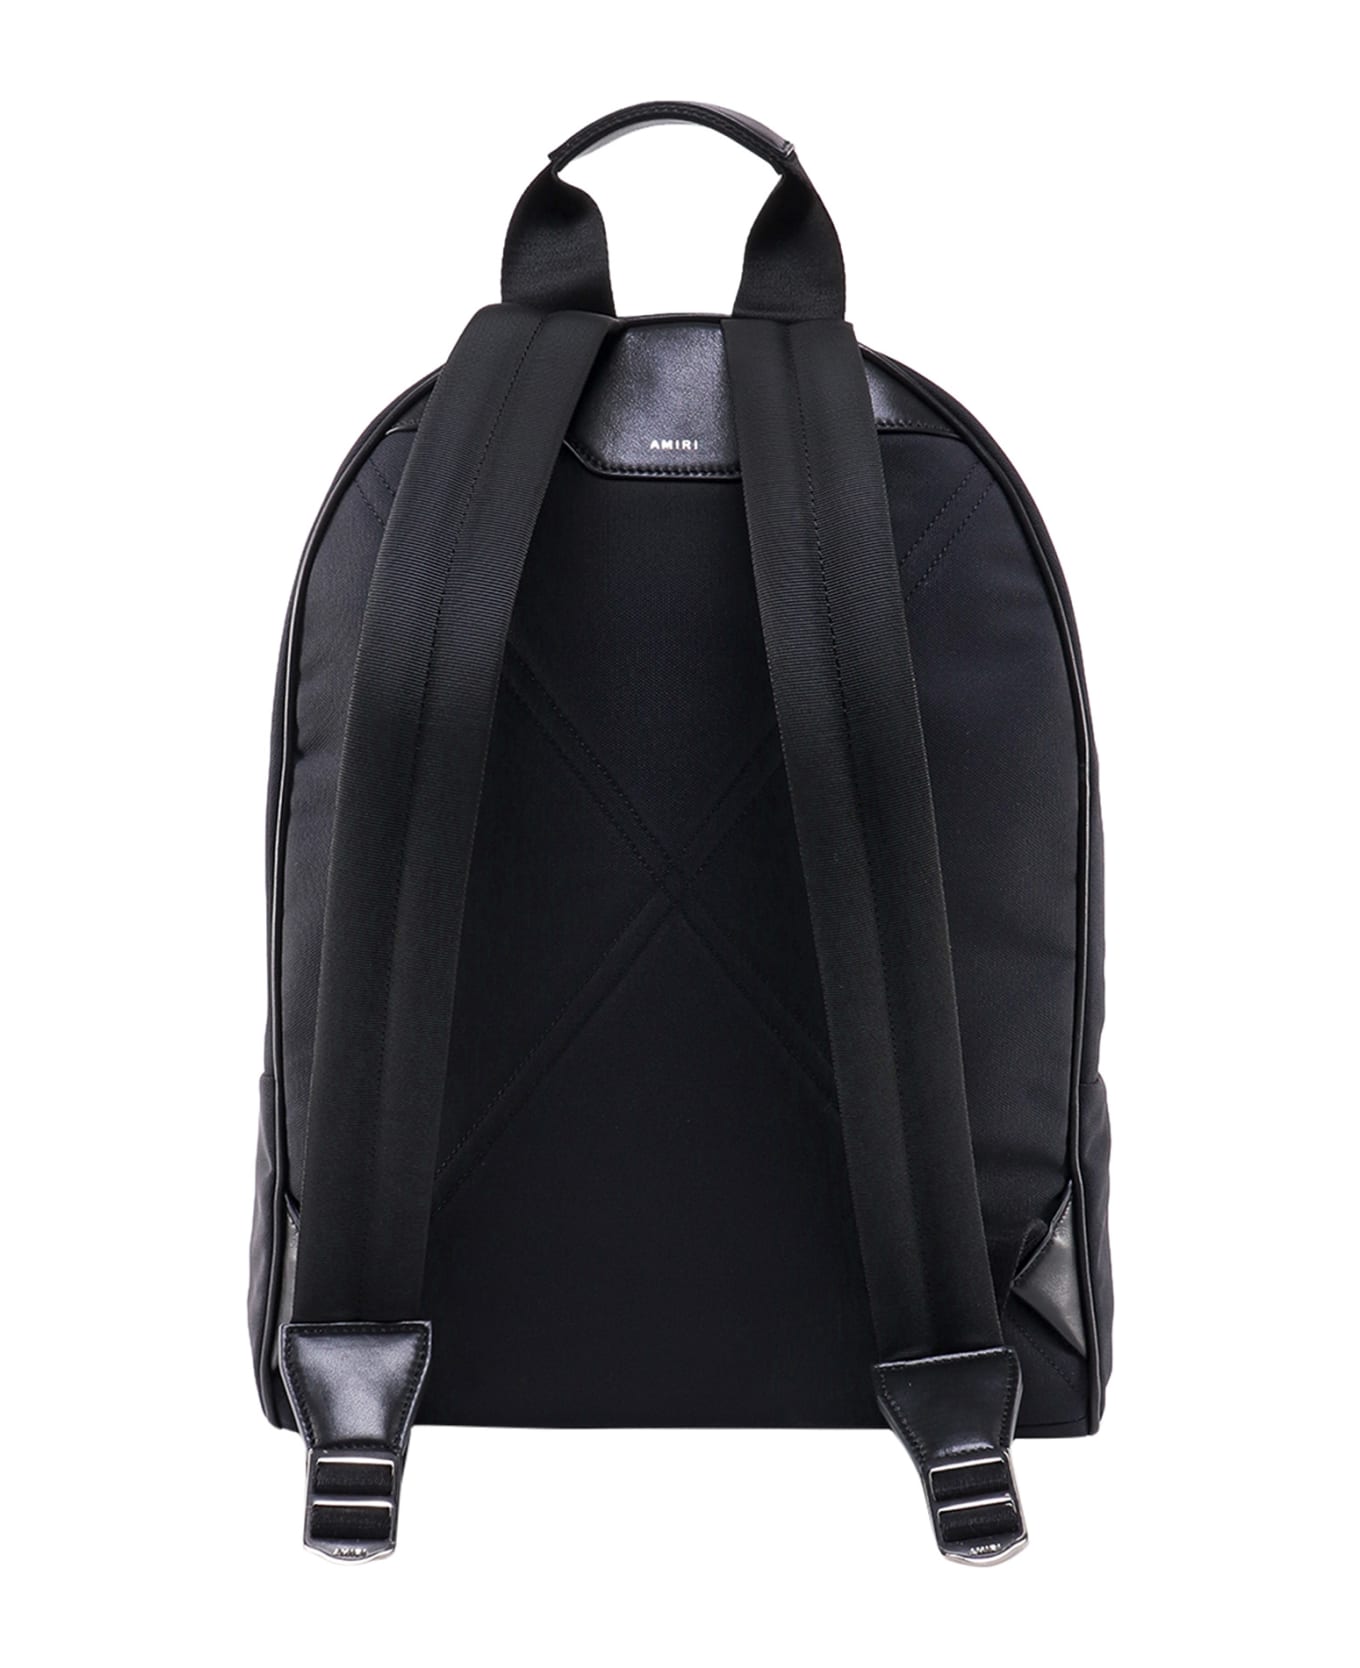 AMIRI Backpack - Black バックパック